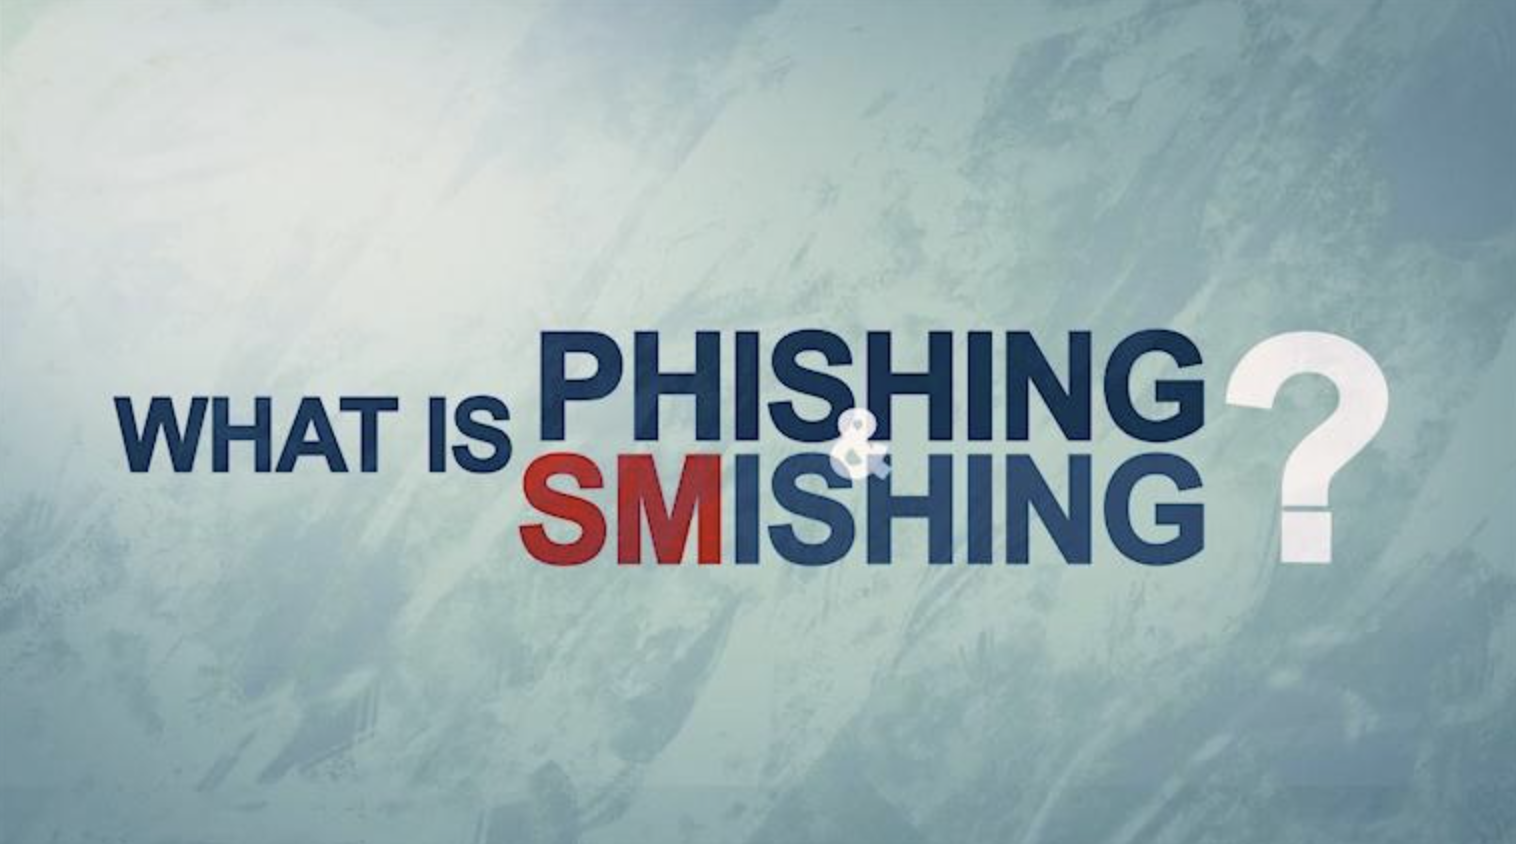 What is smishing and phishing?